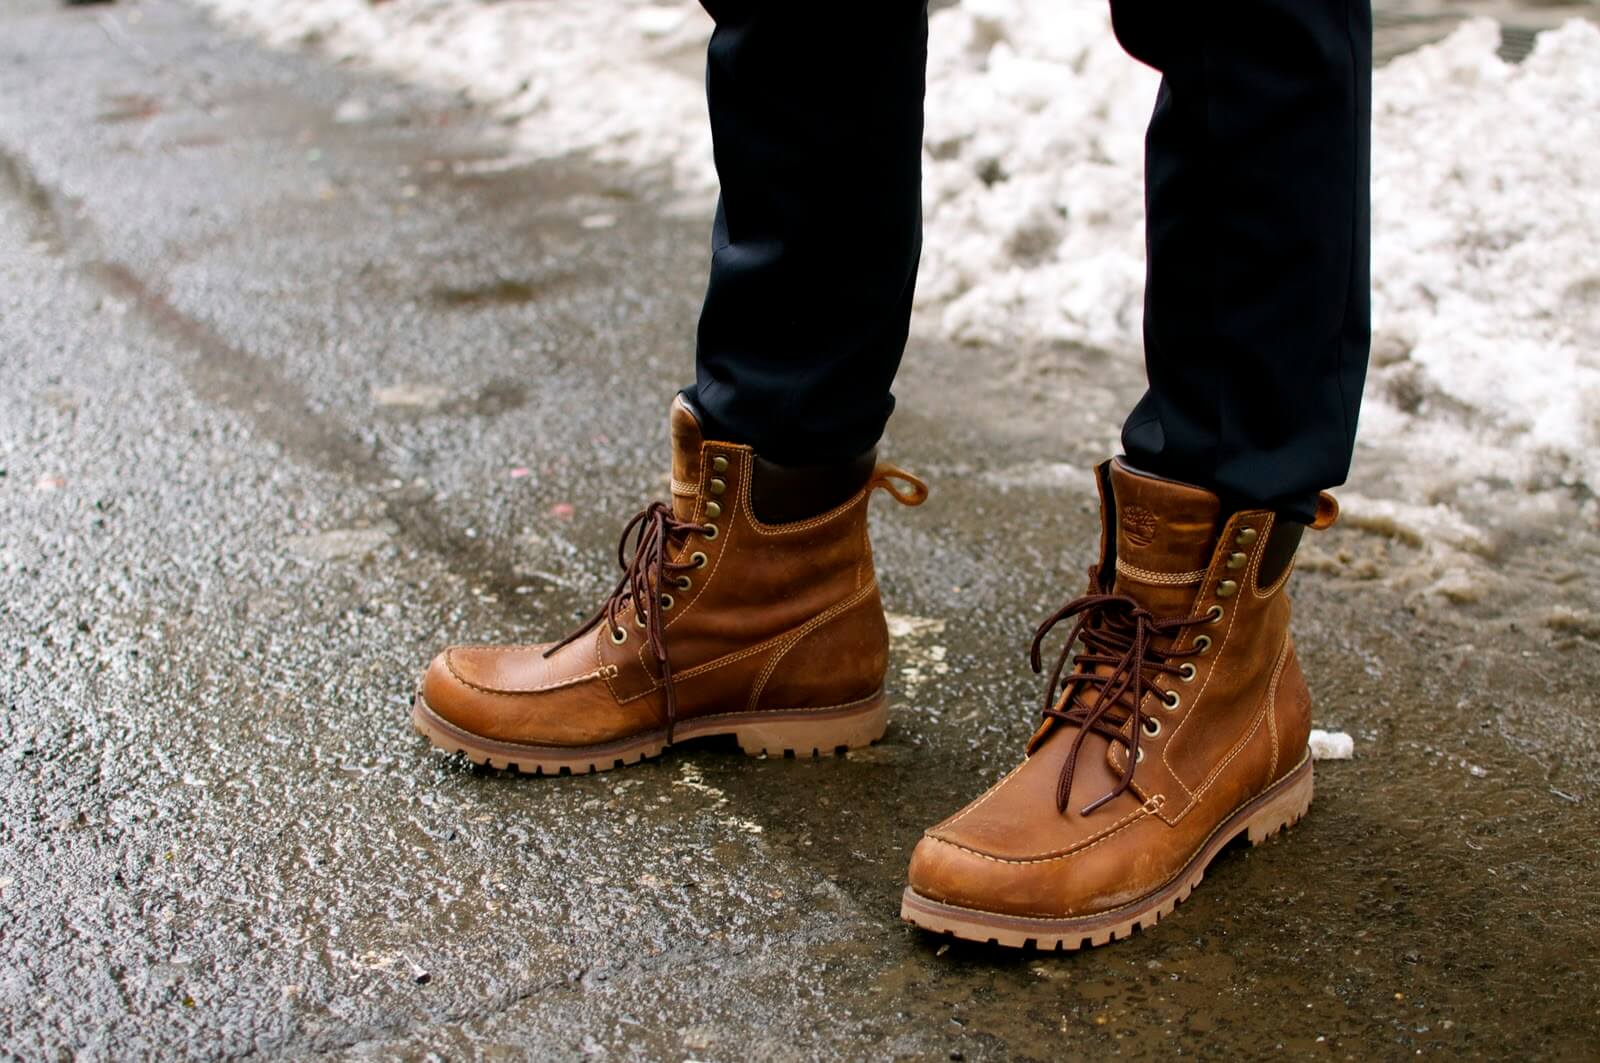 most stylish mens boots